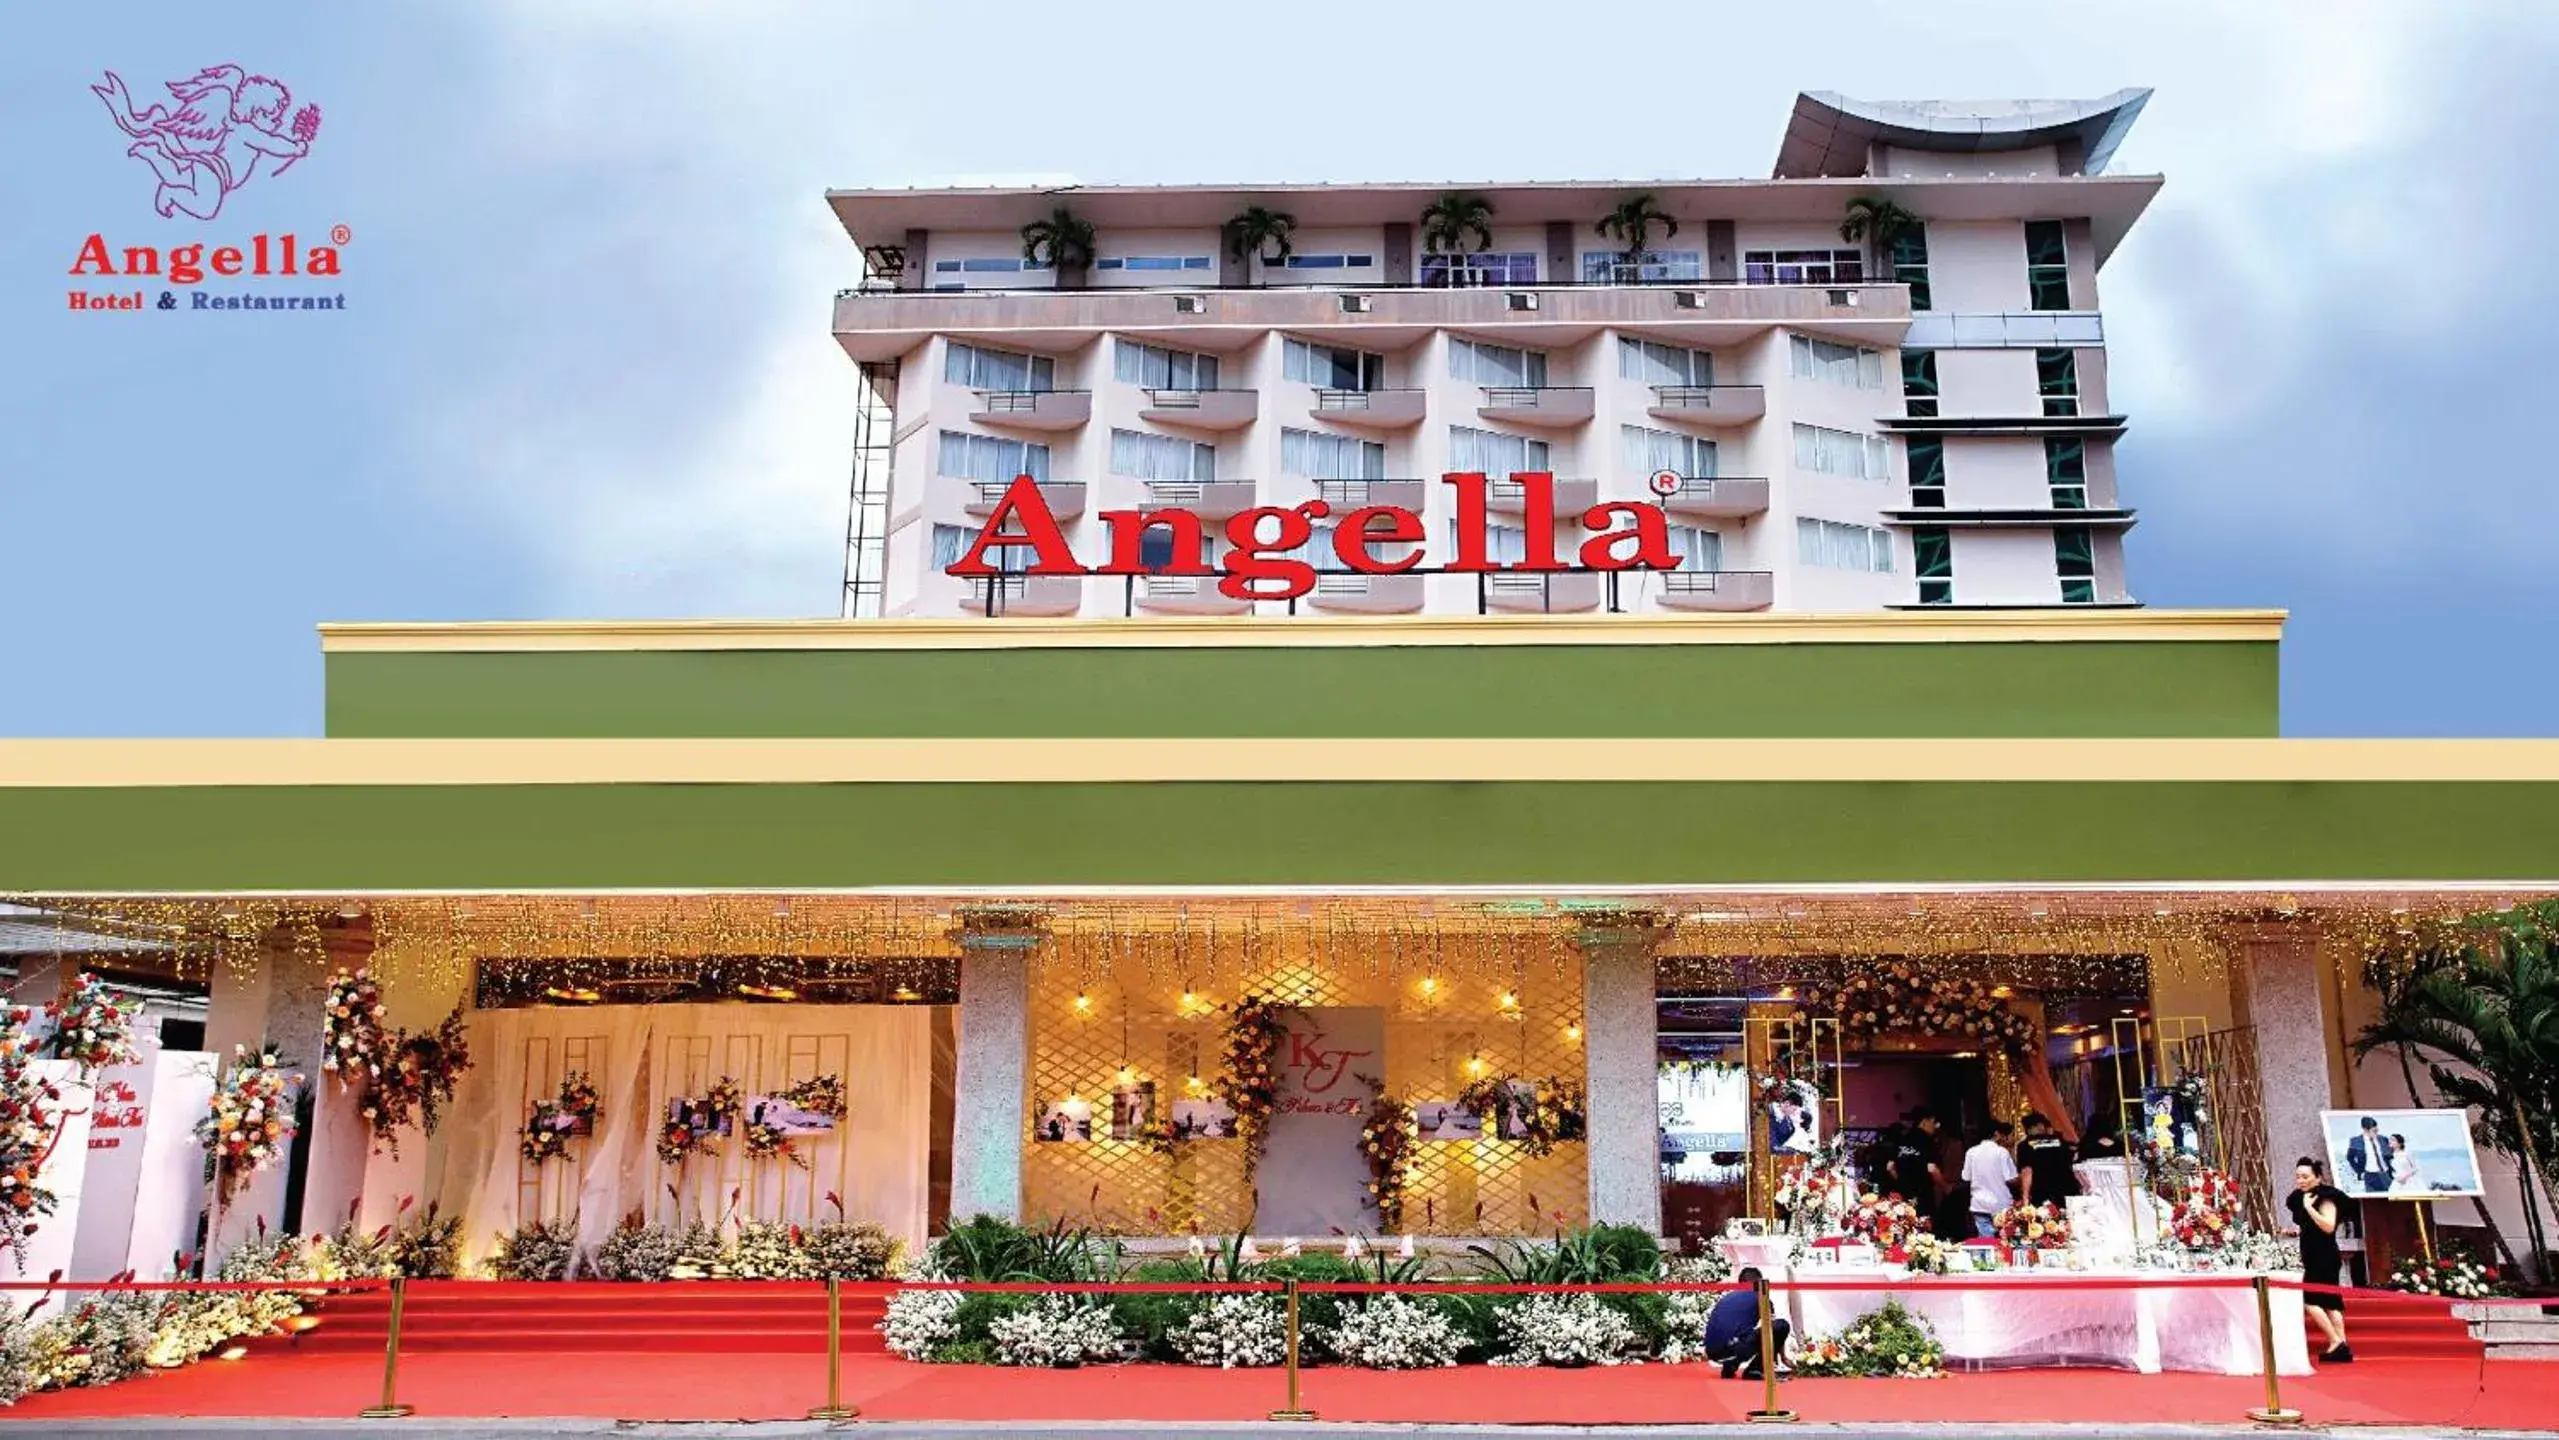 Property logo or sign in Angella Hotel Nha Trang